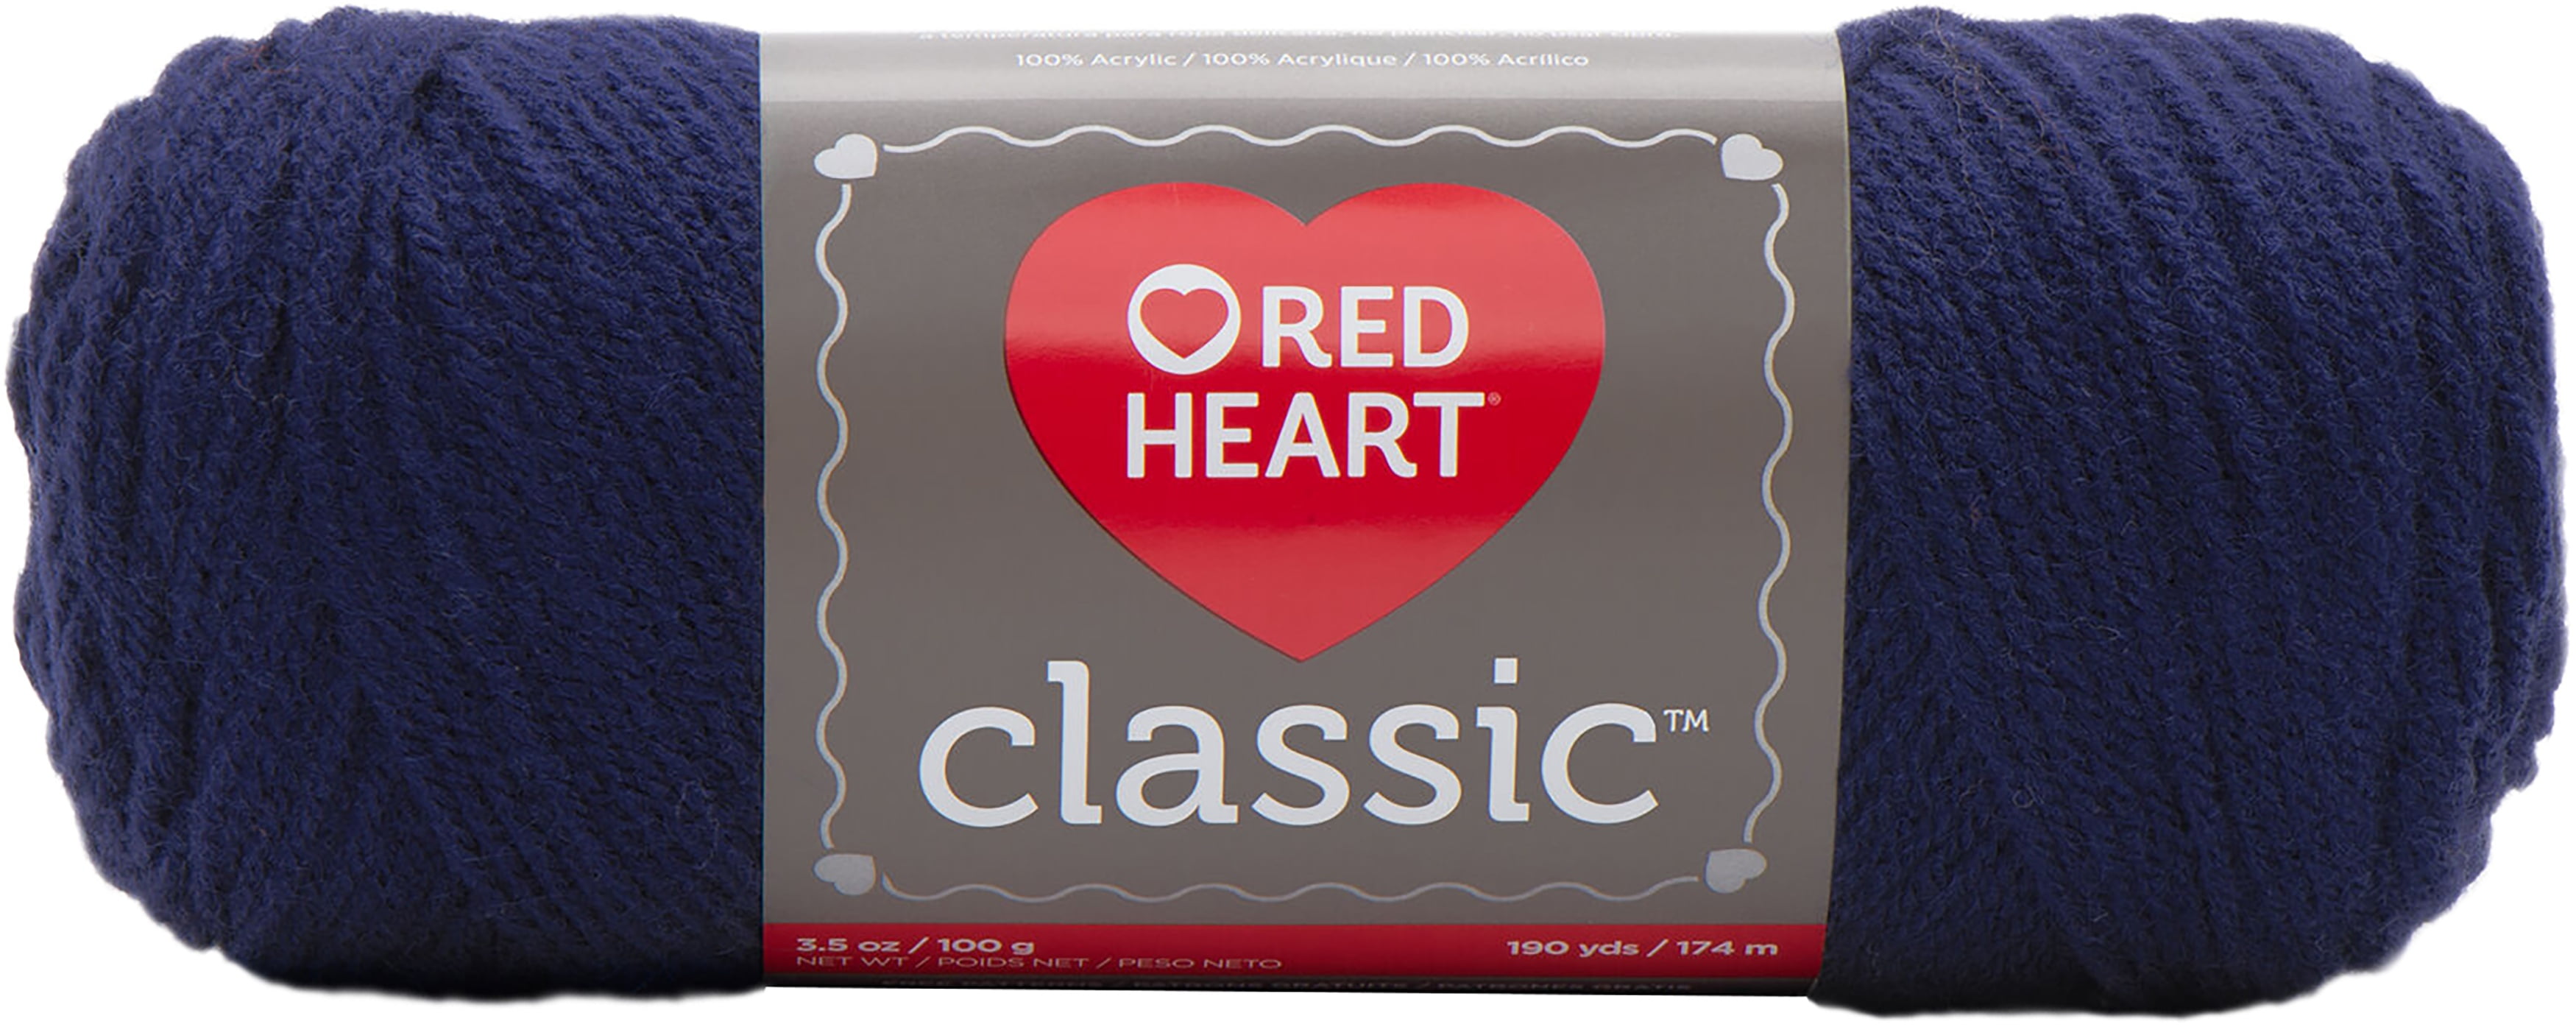 Red Heart Classic Yarn Black 100% Acrylic 3.5 oz USA AT147